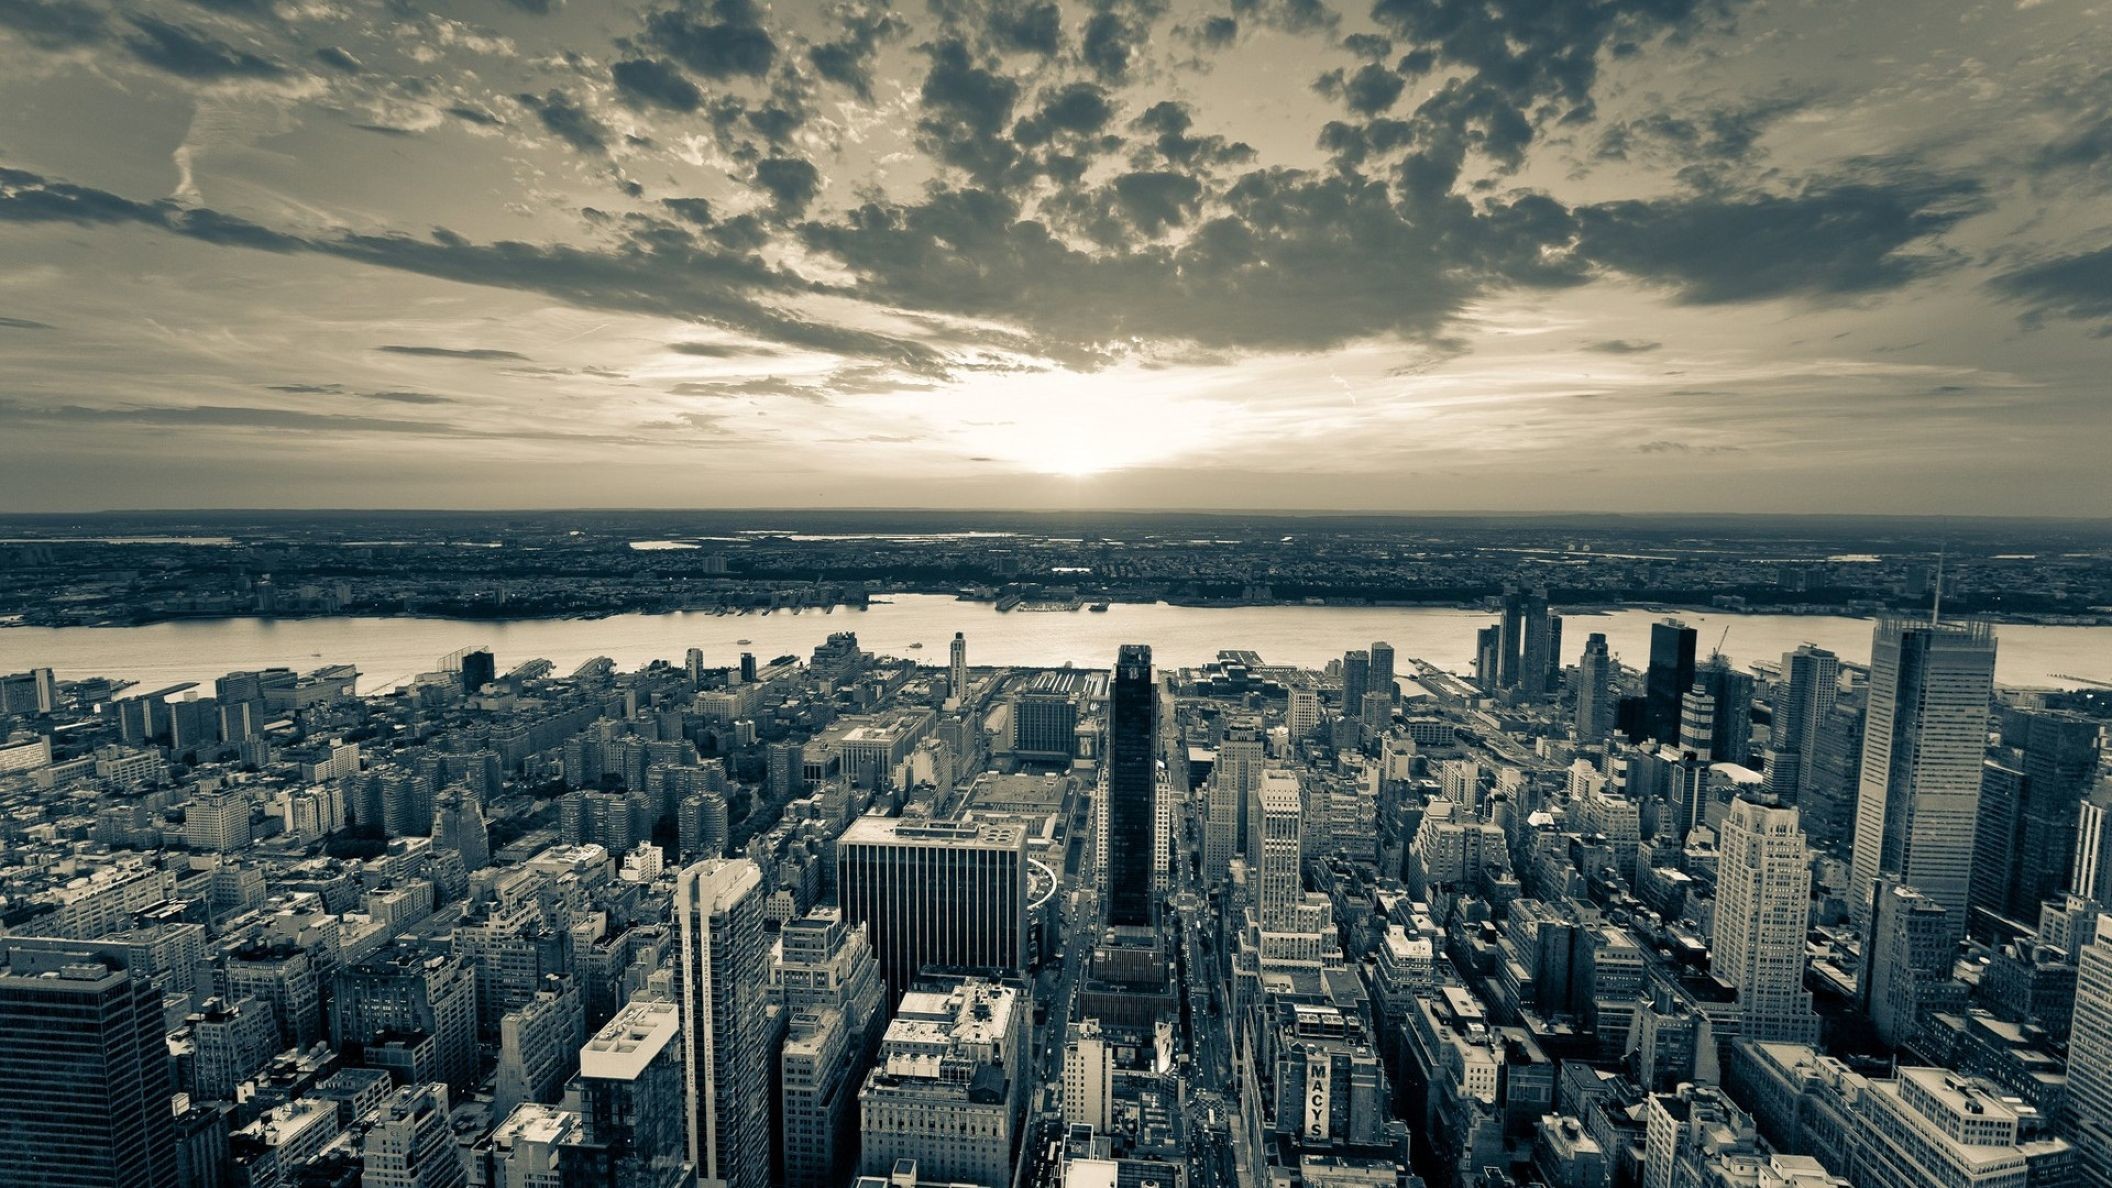 New York City HD Black and White Wallpaper